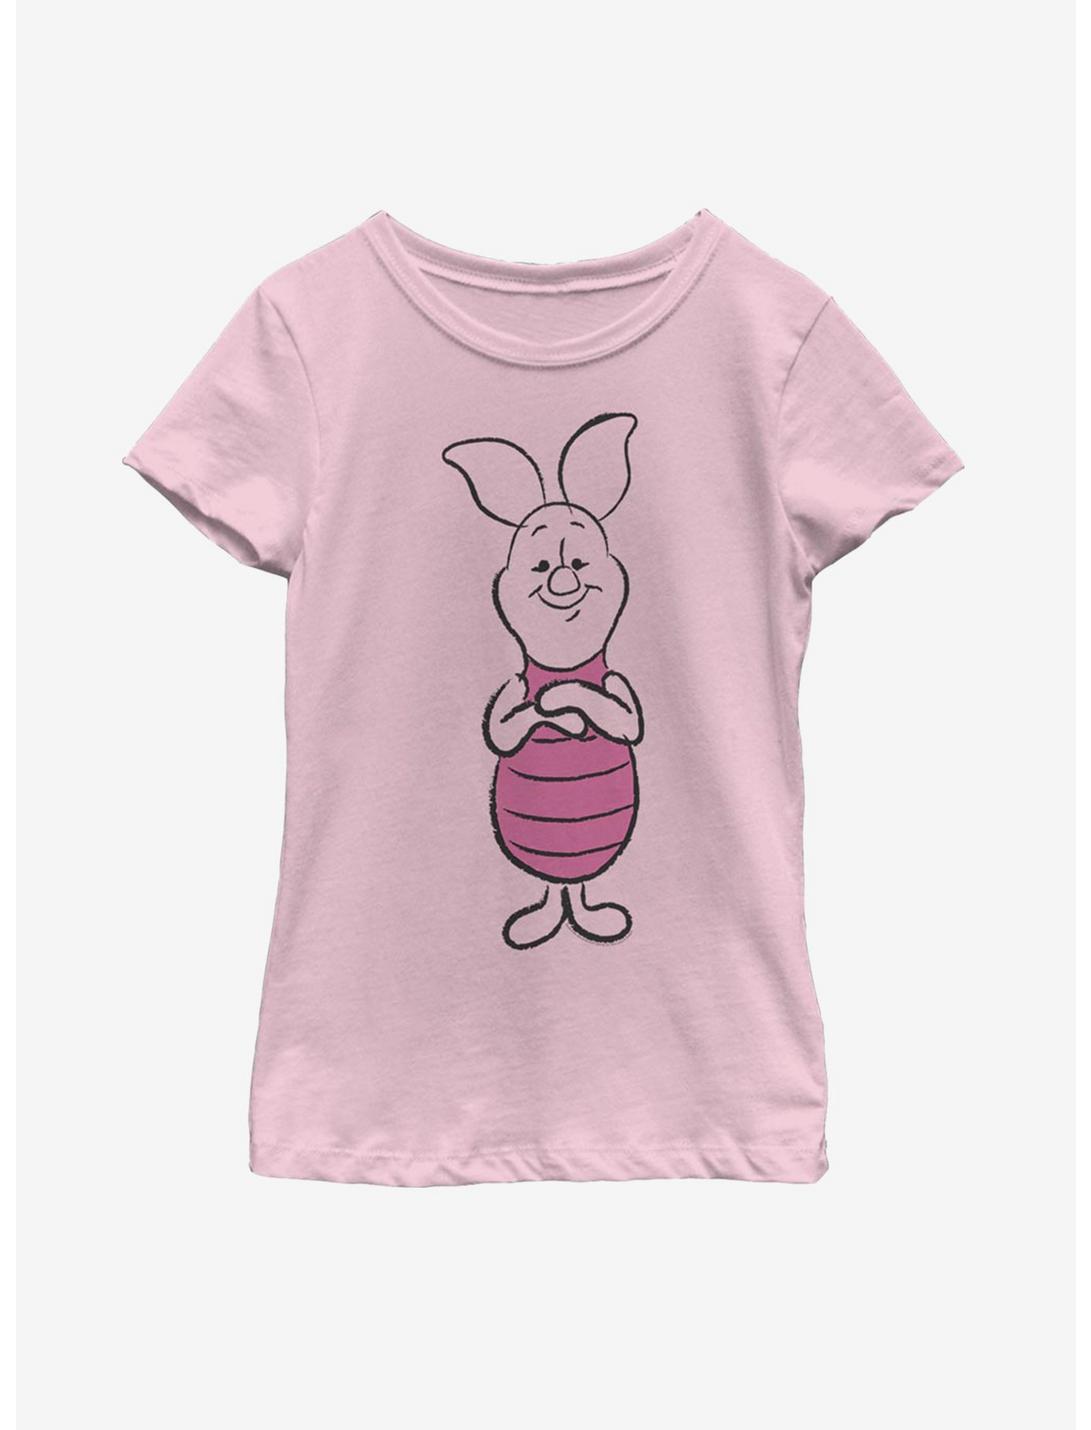 Disney Winnie The Pooh Basic Sketch Piglet Youth Girls T-Shirt, PINK, hi-res